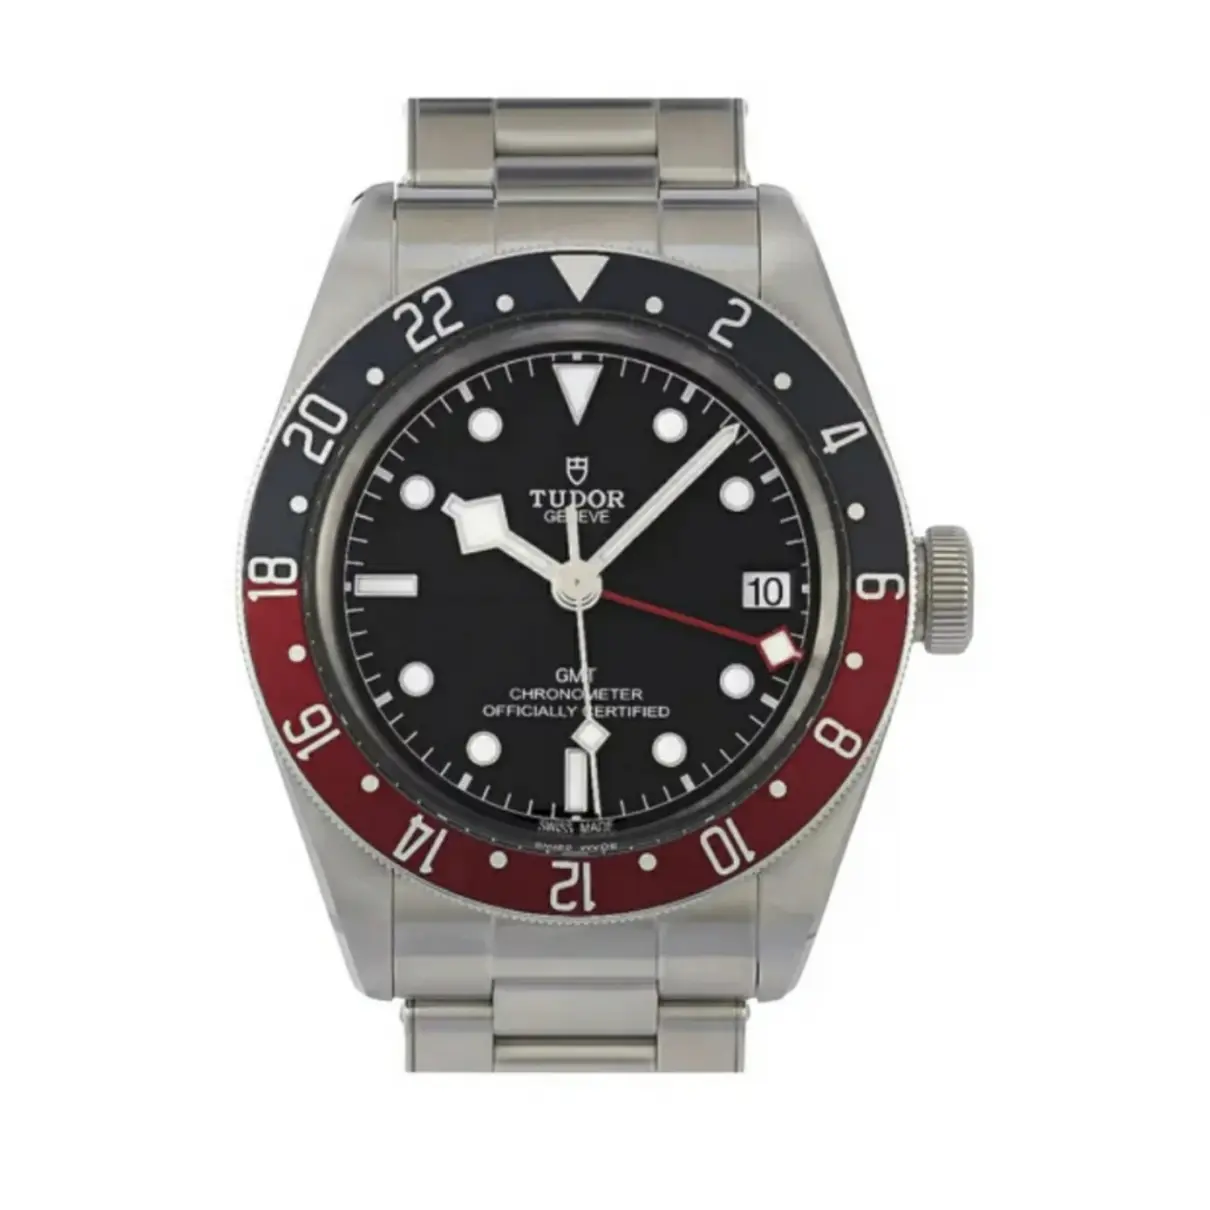 Buy Tudor Black Bay GMT watch online